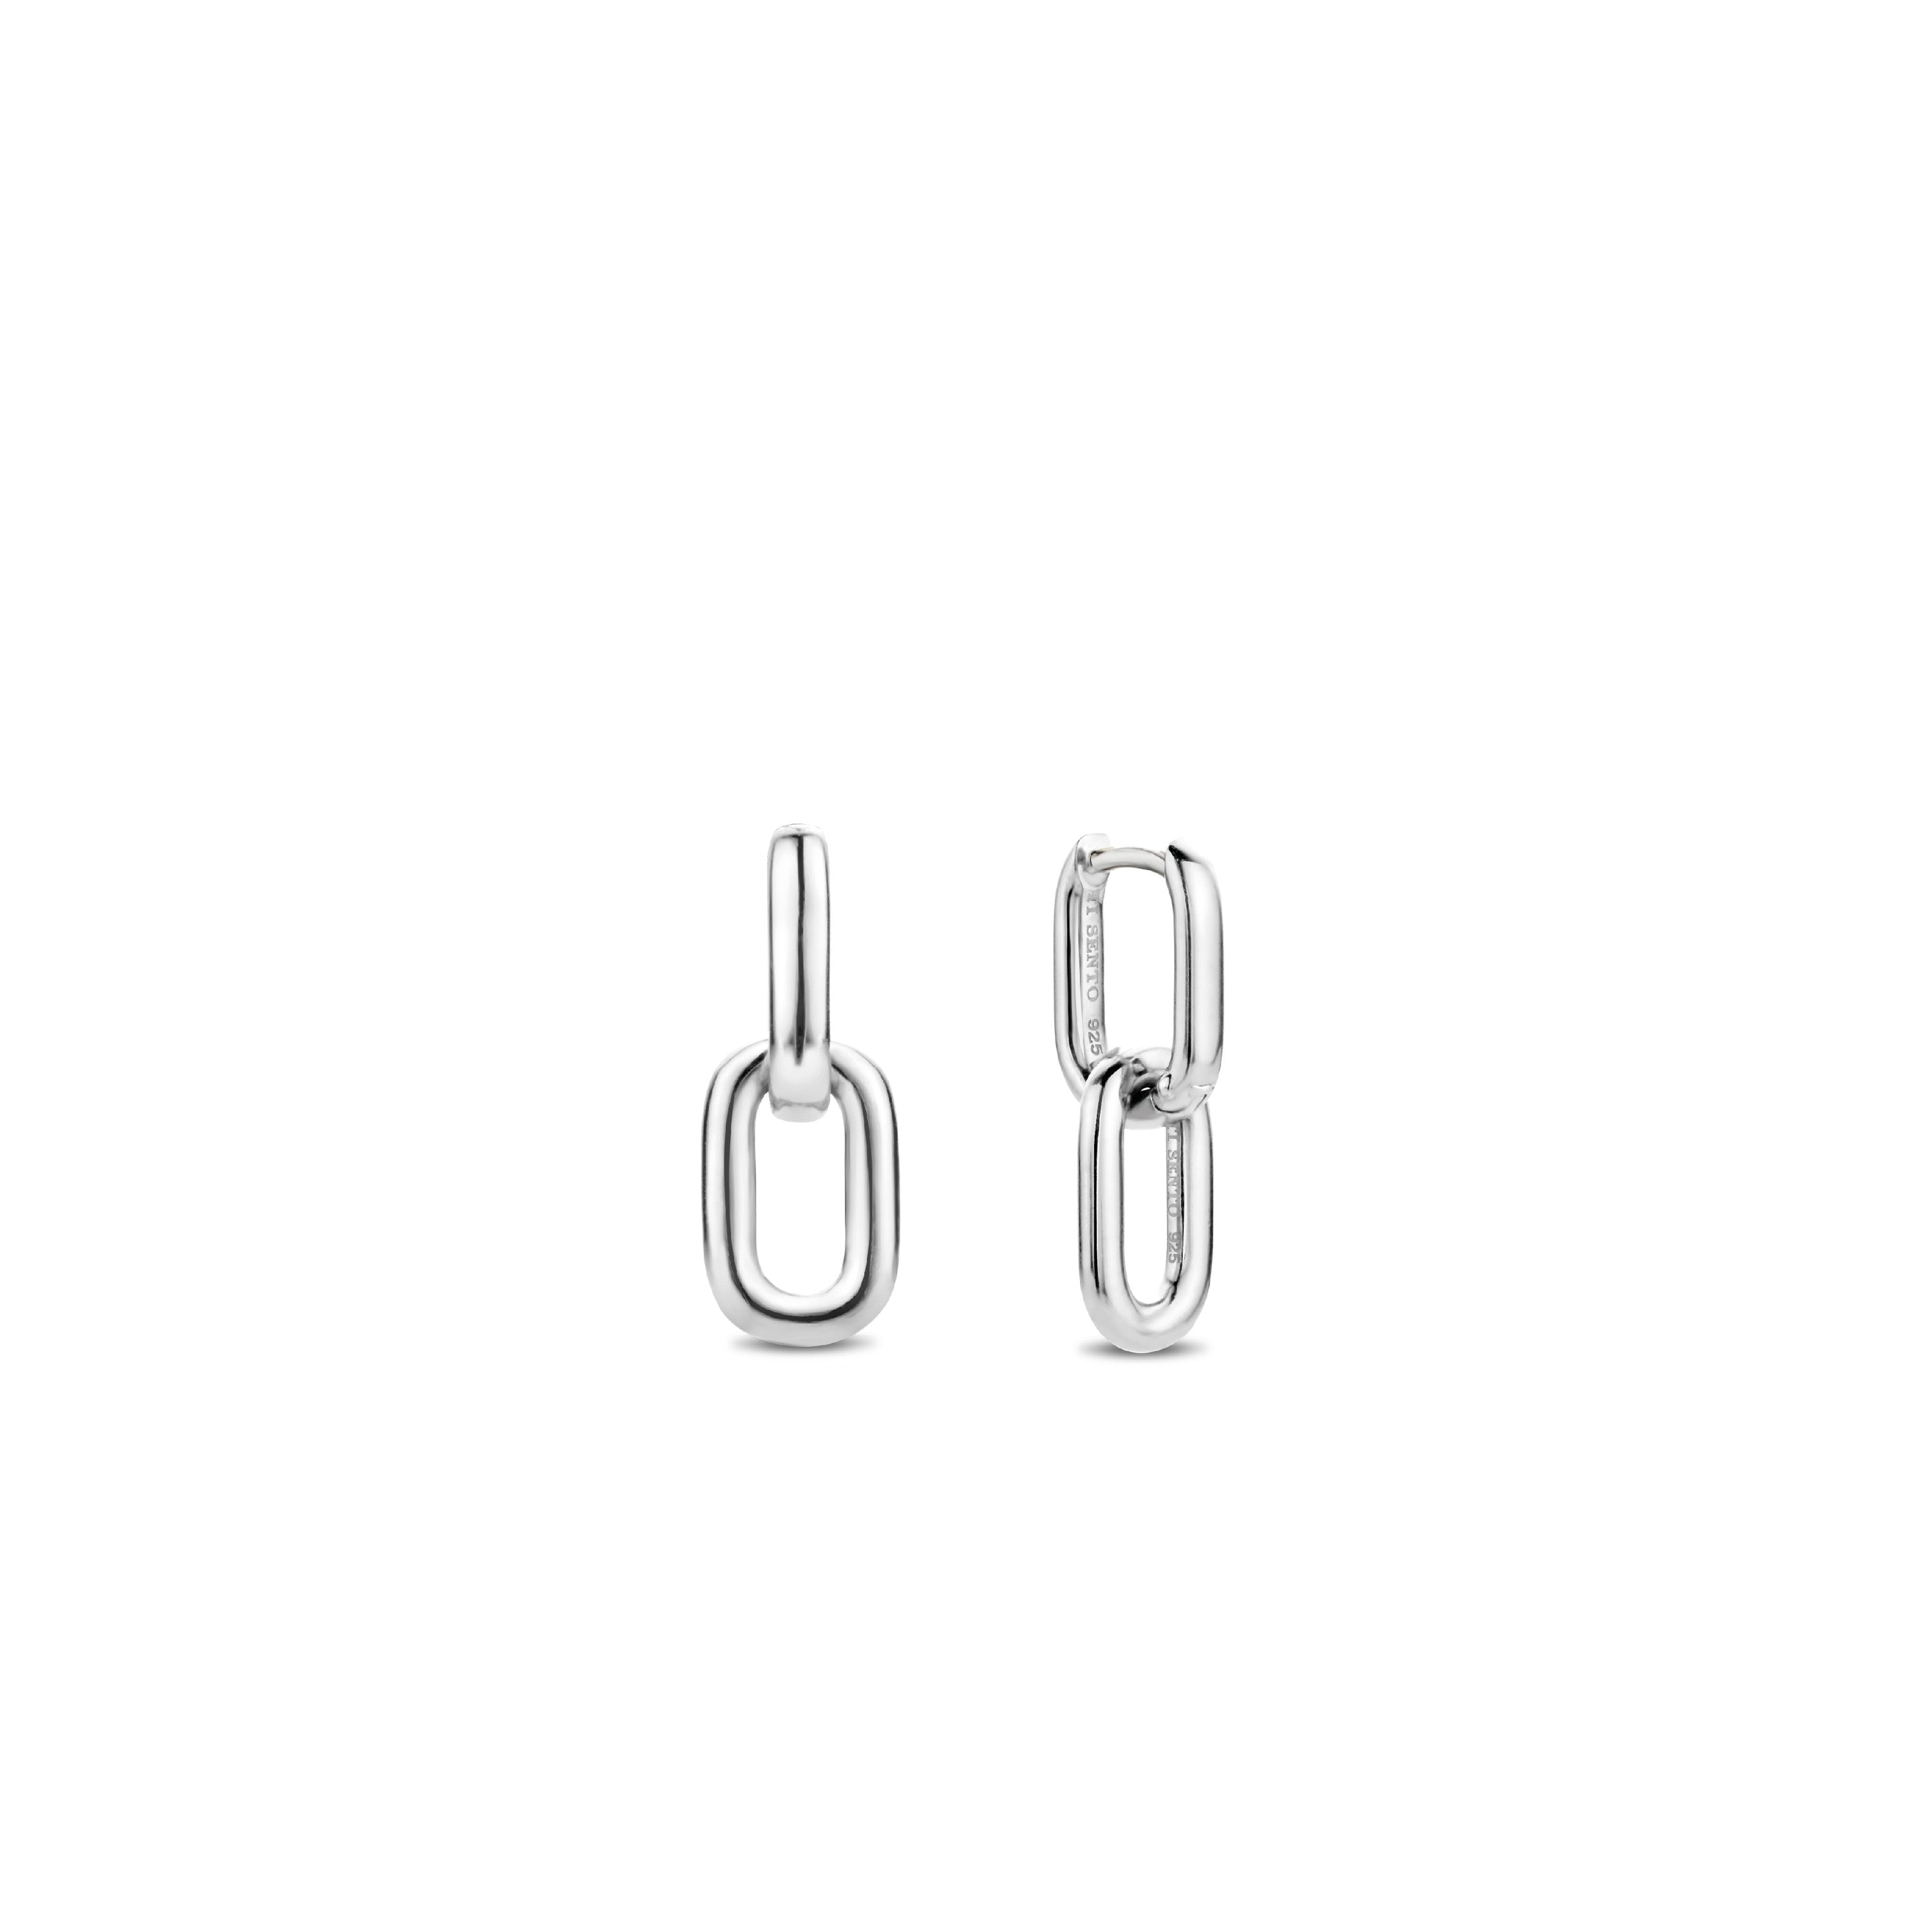 Two Paperclip Link Earrings